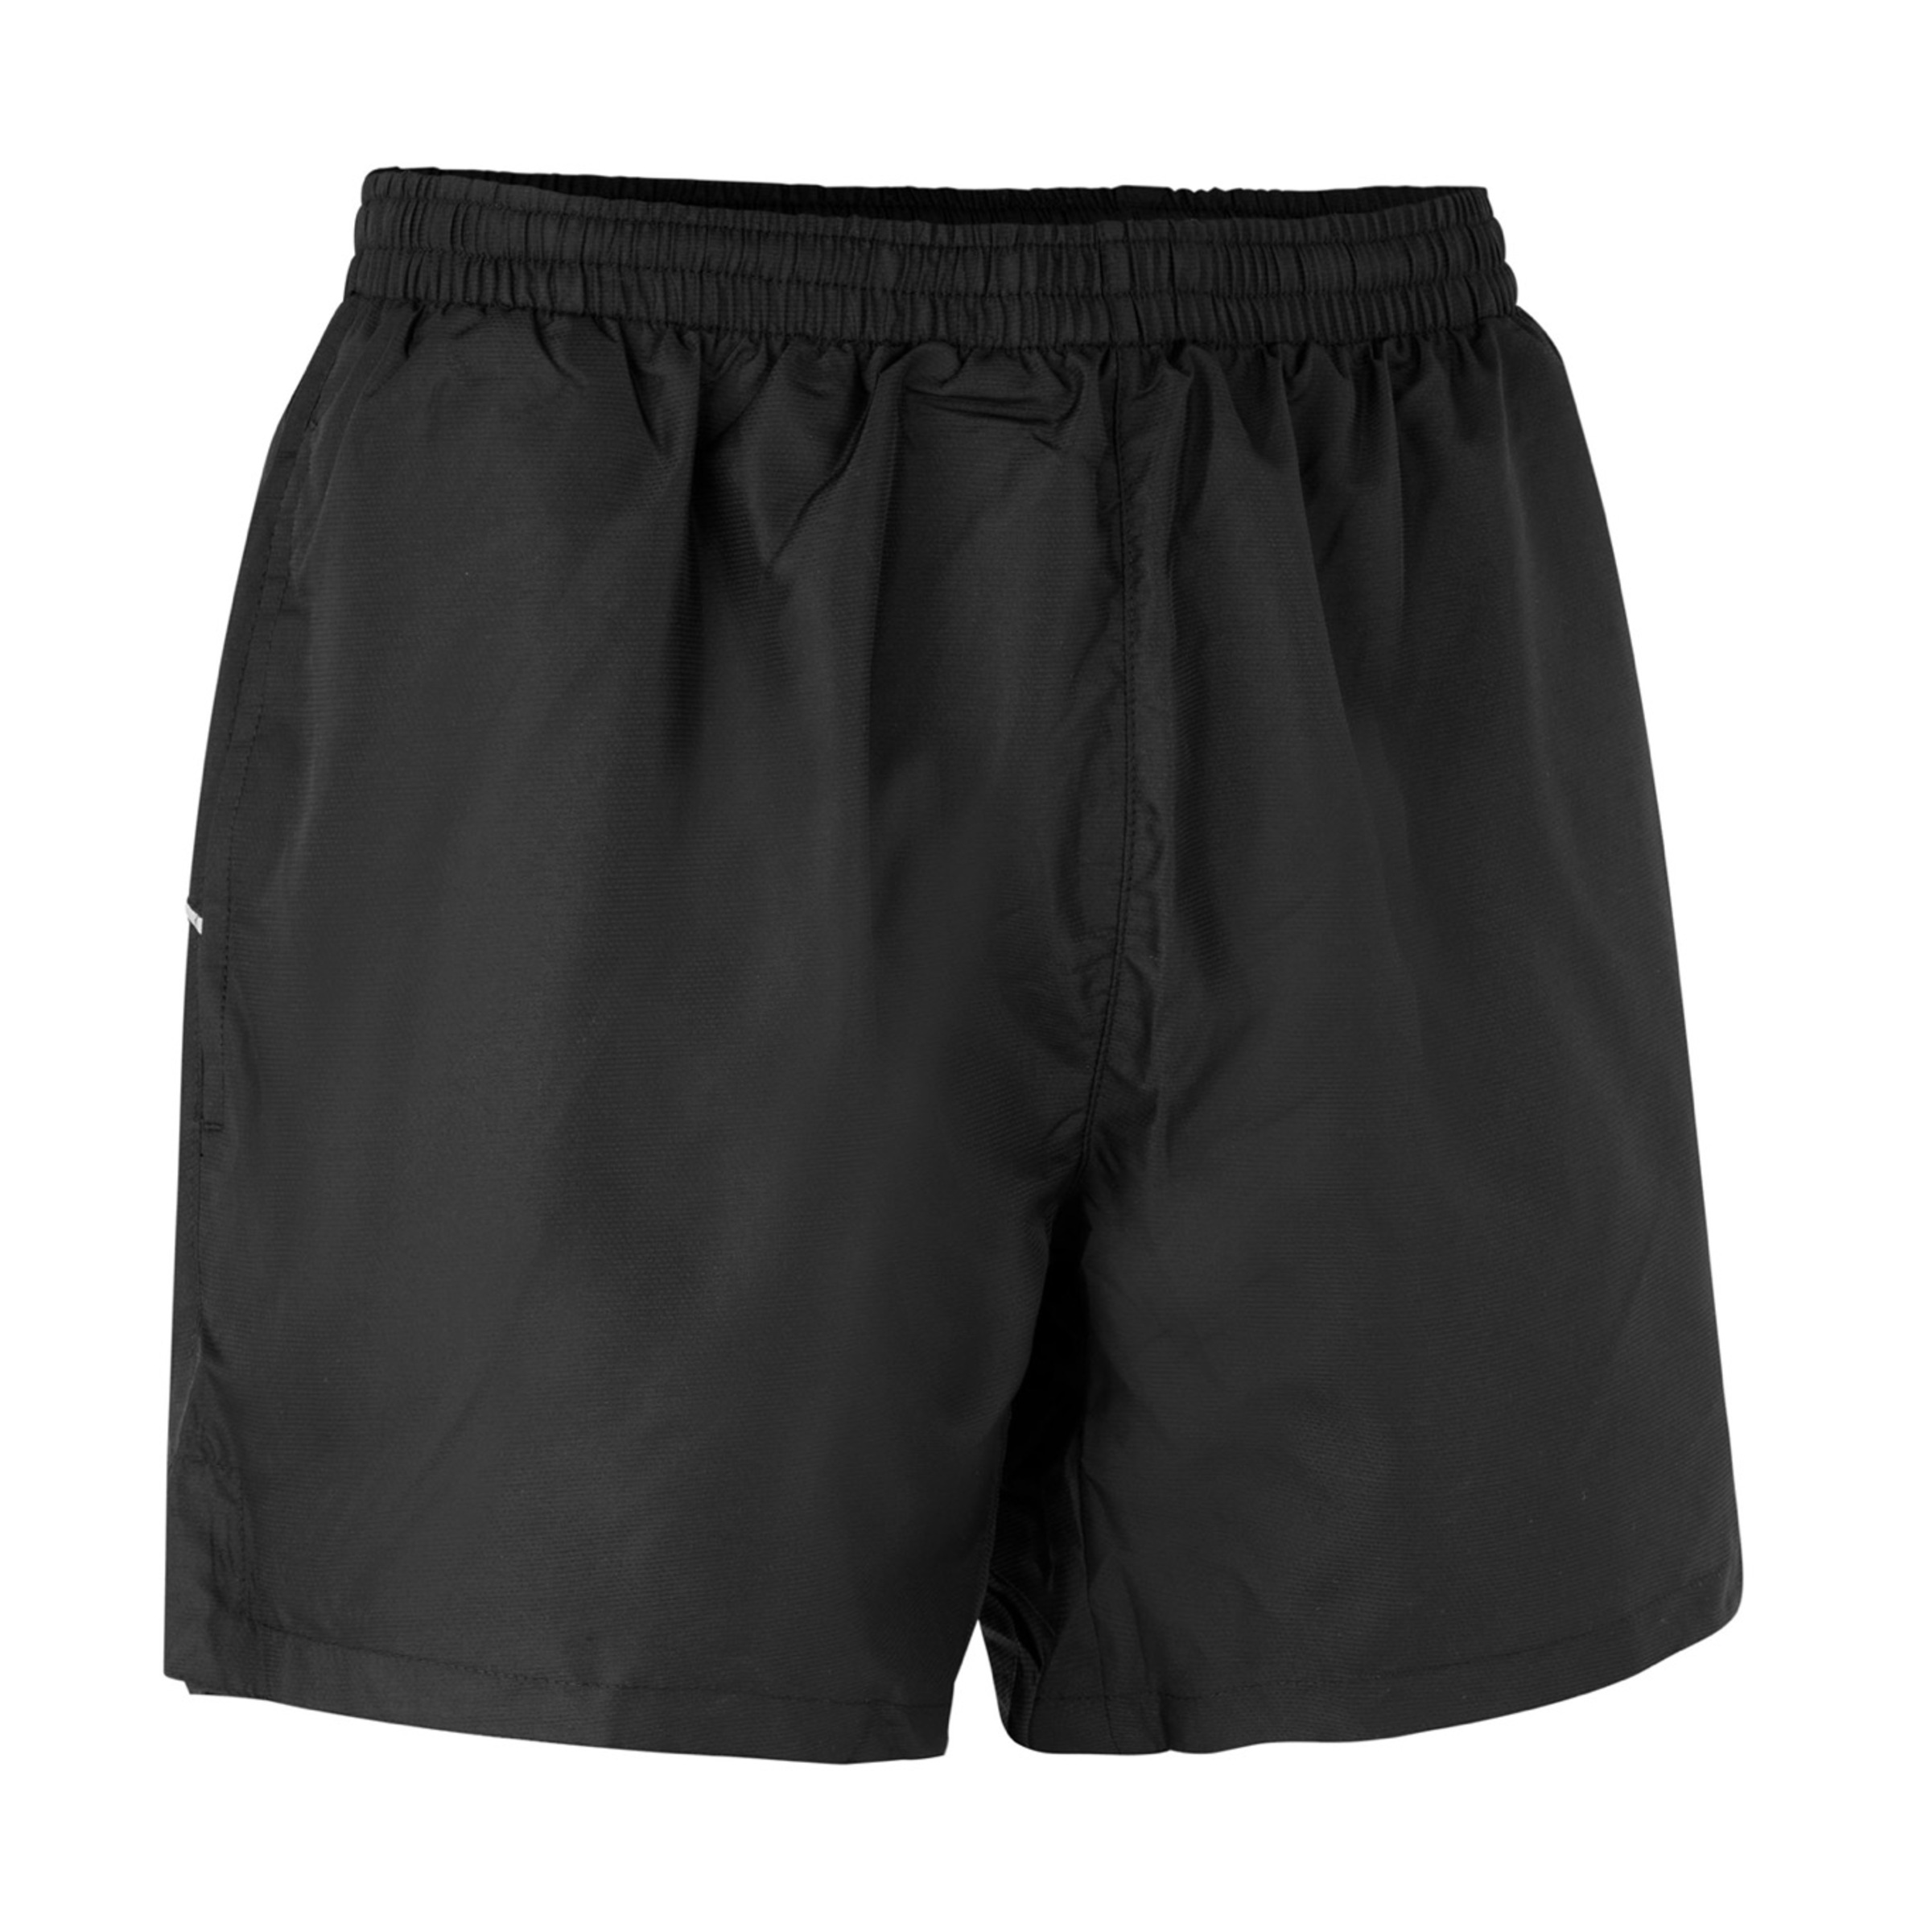 Idwear Active shorts